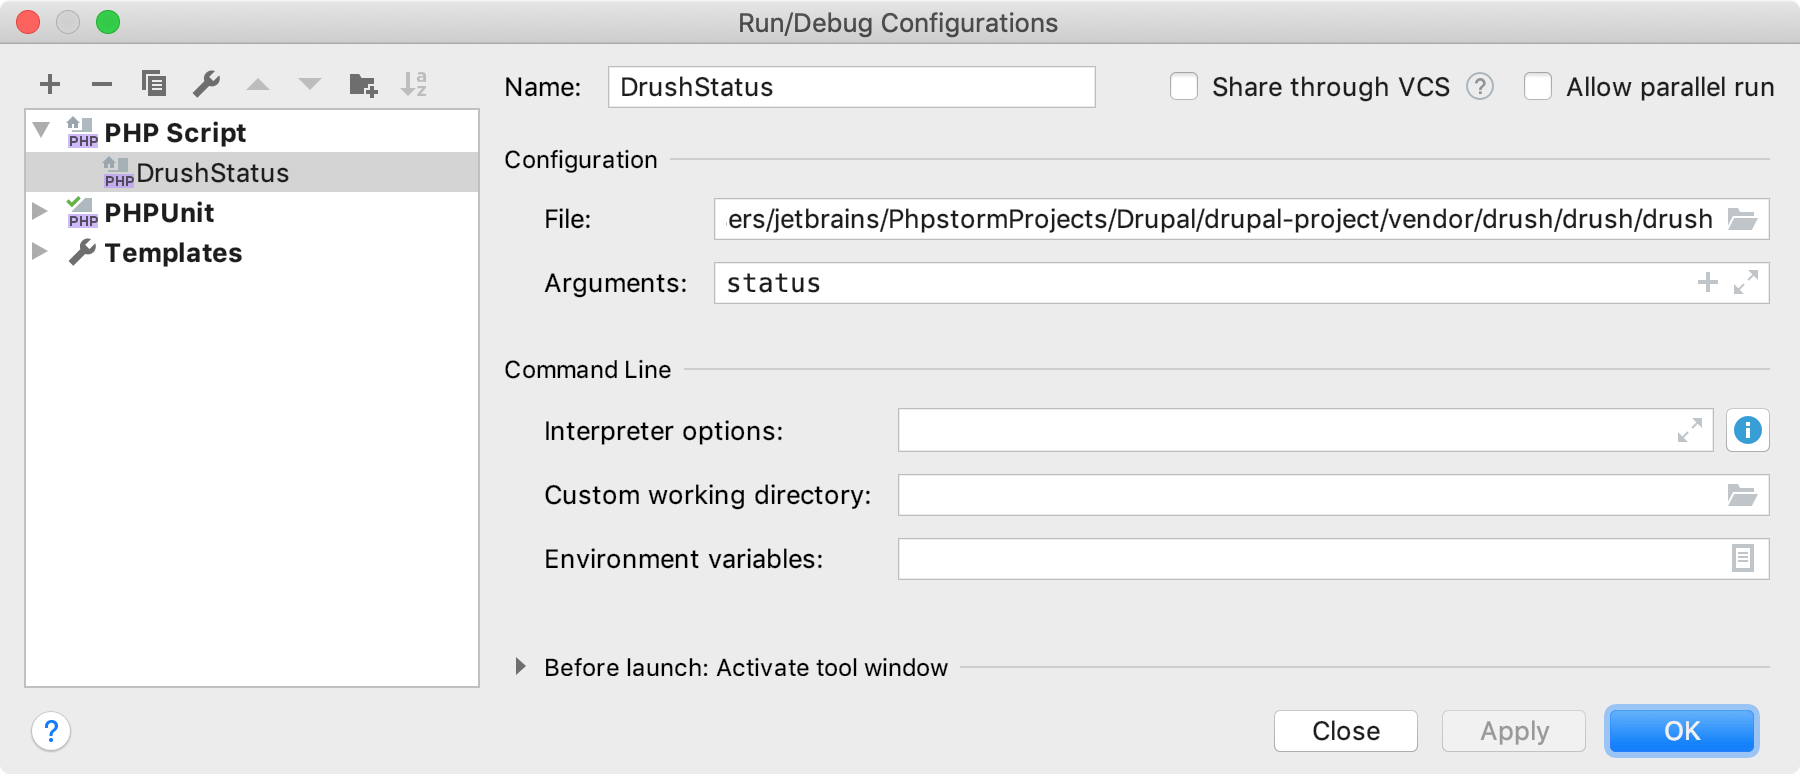 Run/Debug Configurations dialog for Drupal CLI command